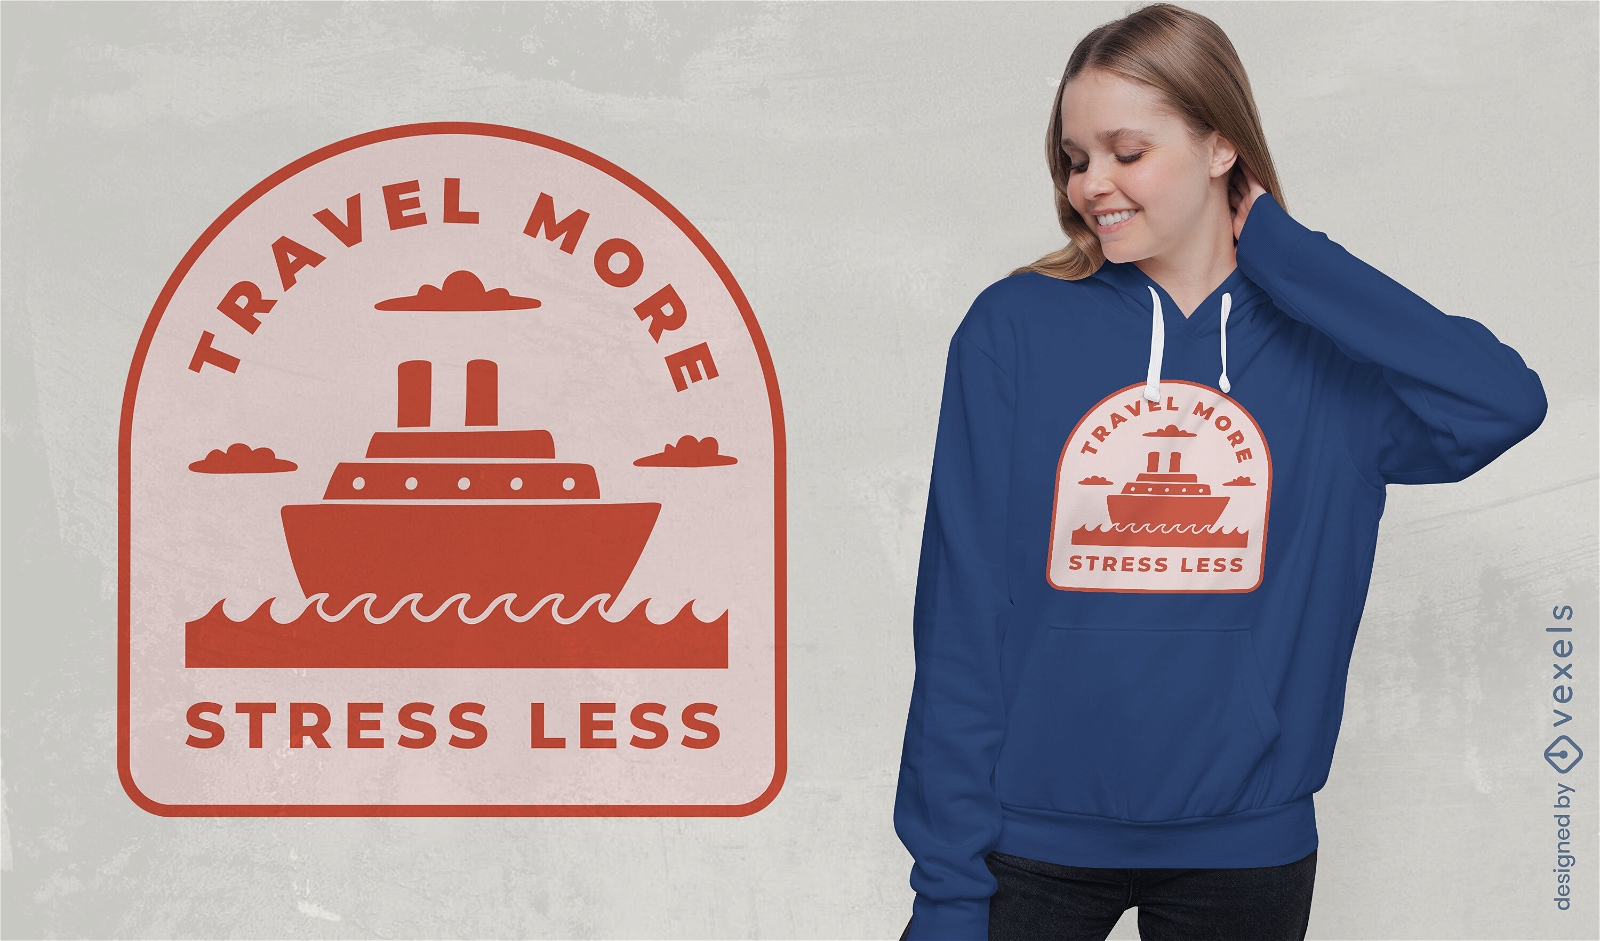 Ship in the ocean travel life t-shirt design